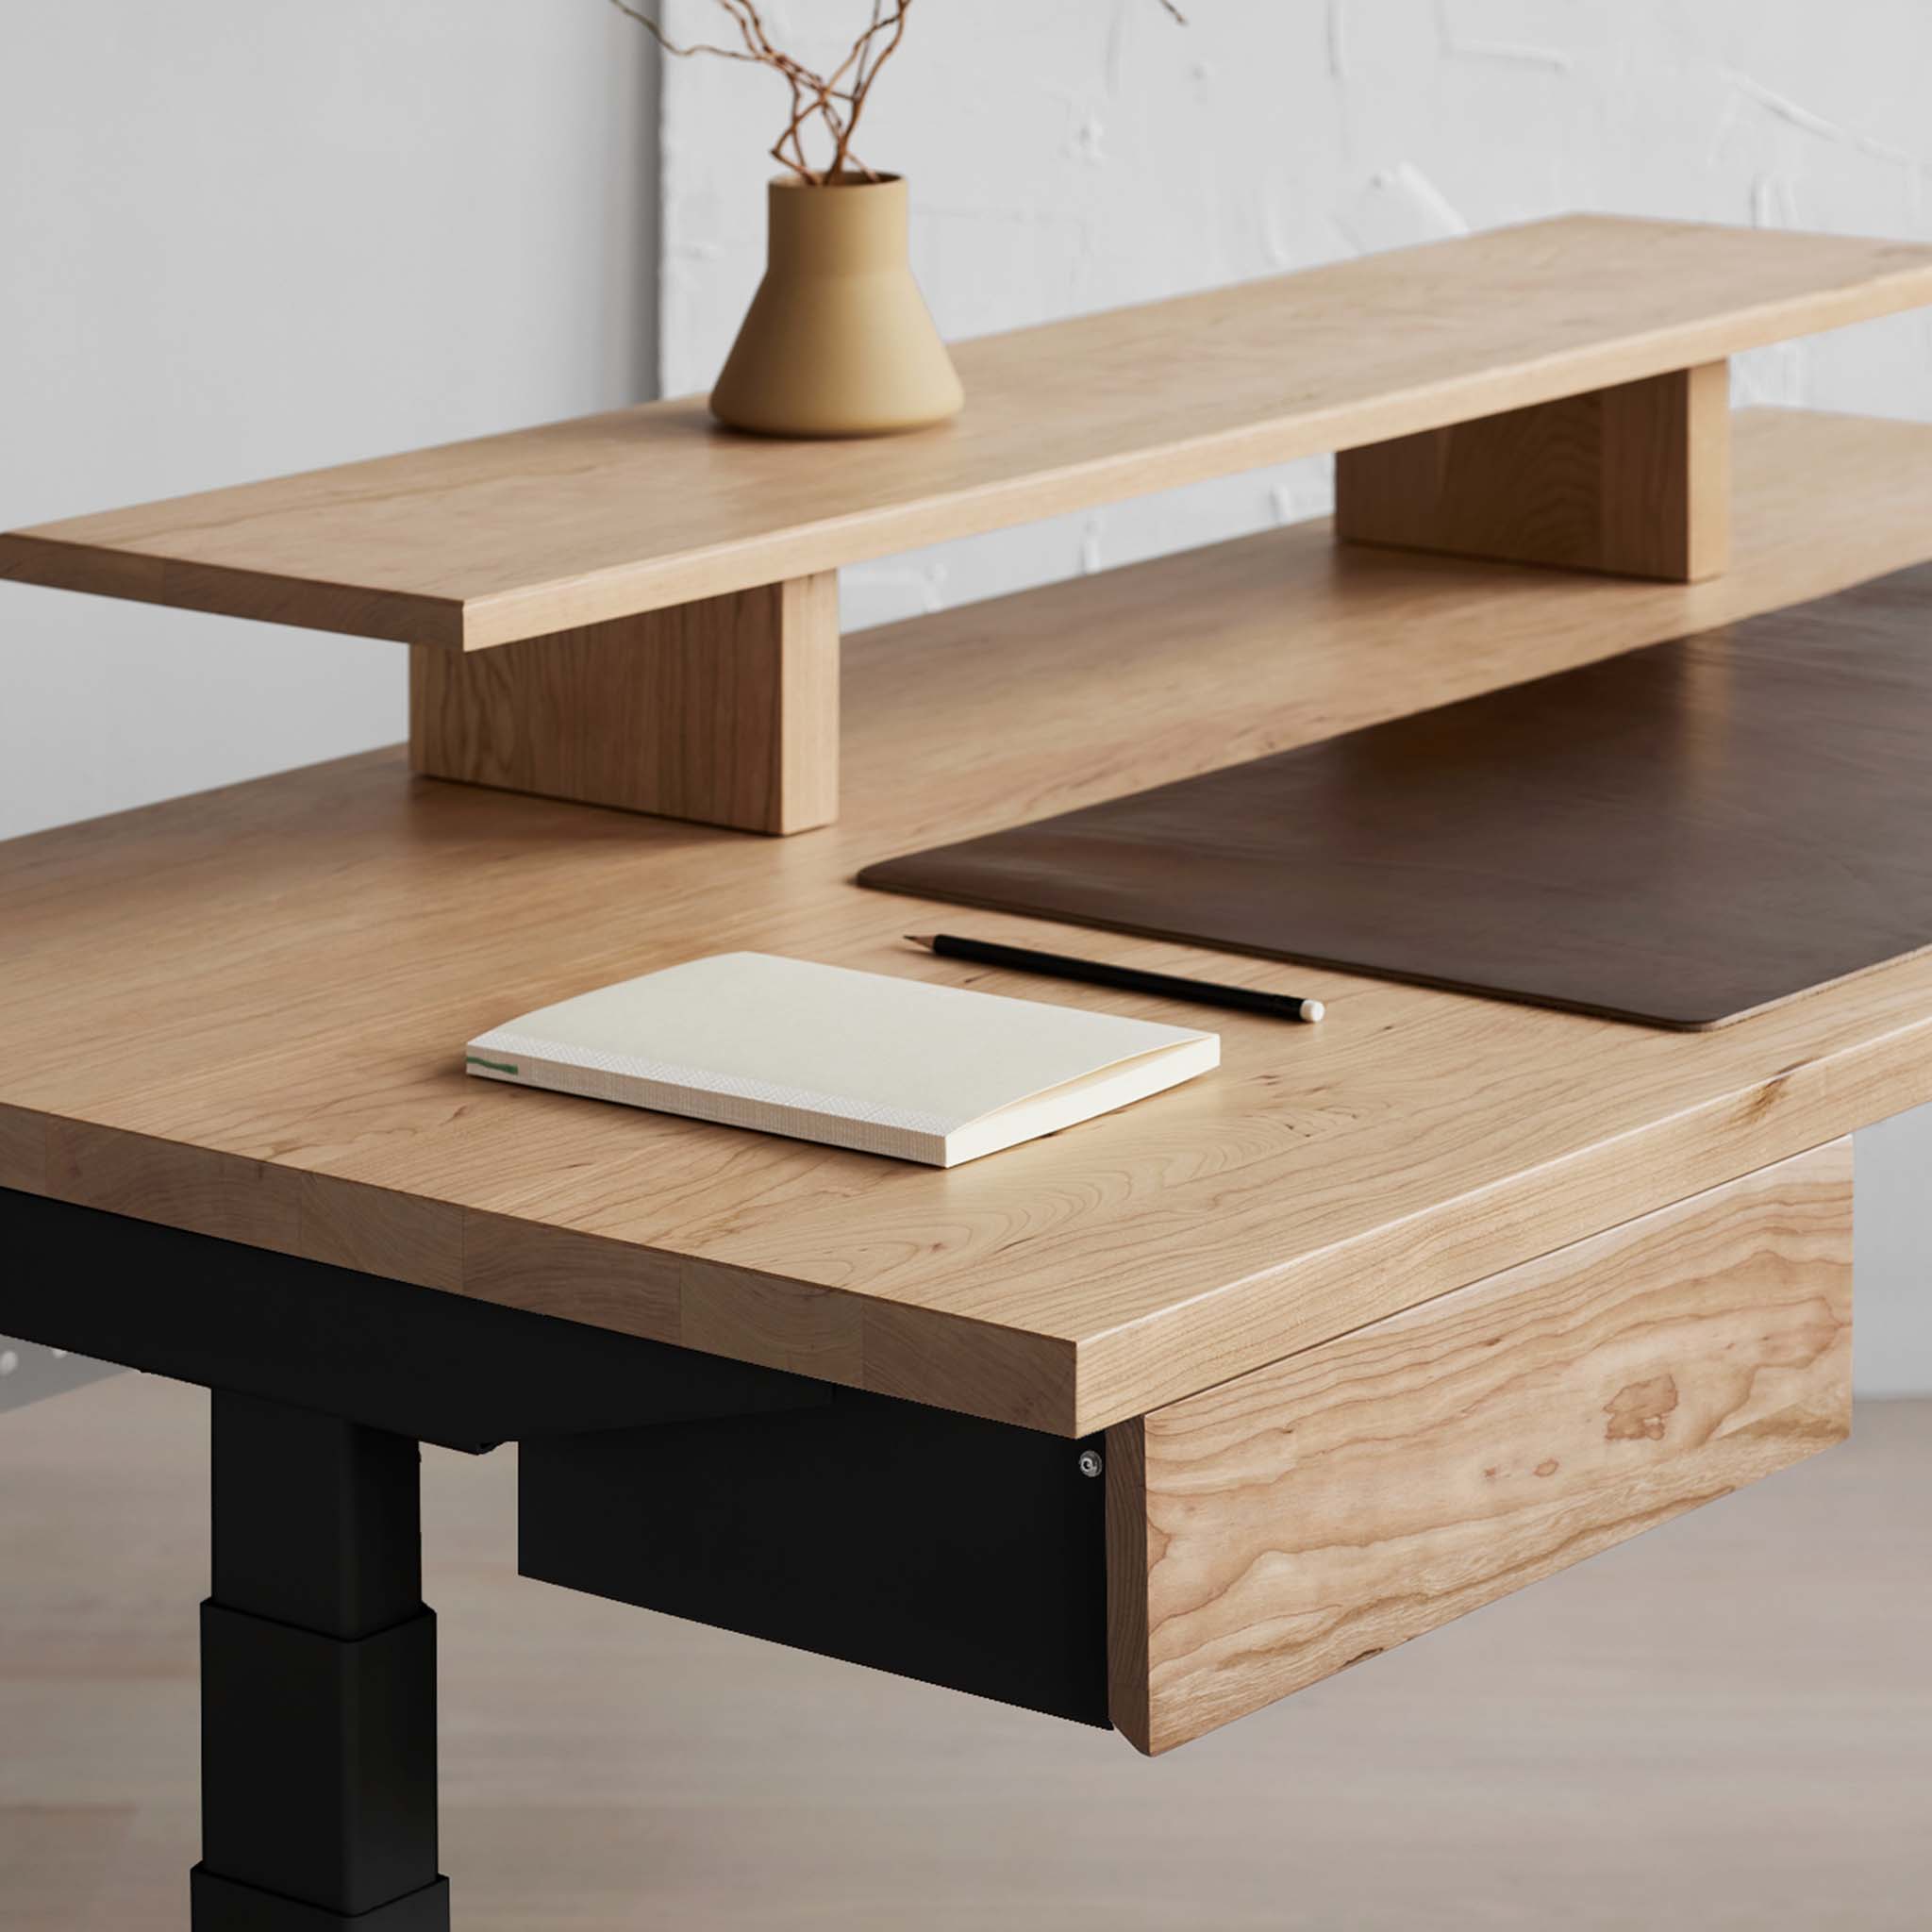 Solid Wood Standing Desk: Shop the Sway Desk | Ergonofis 